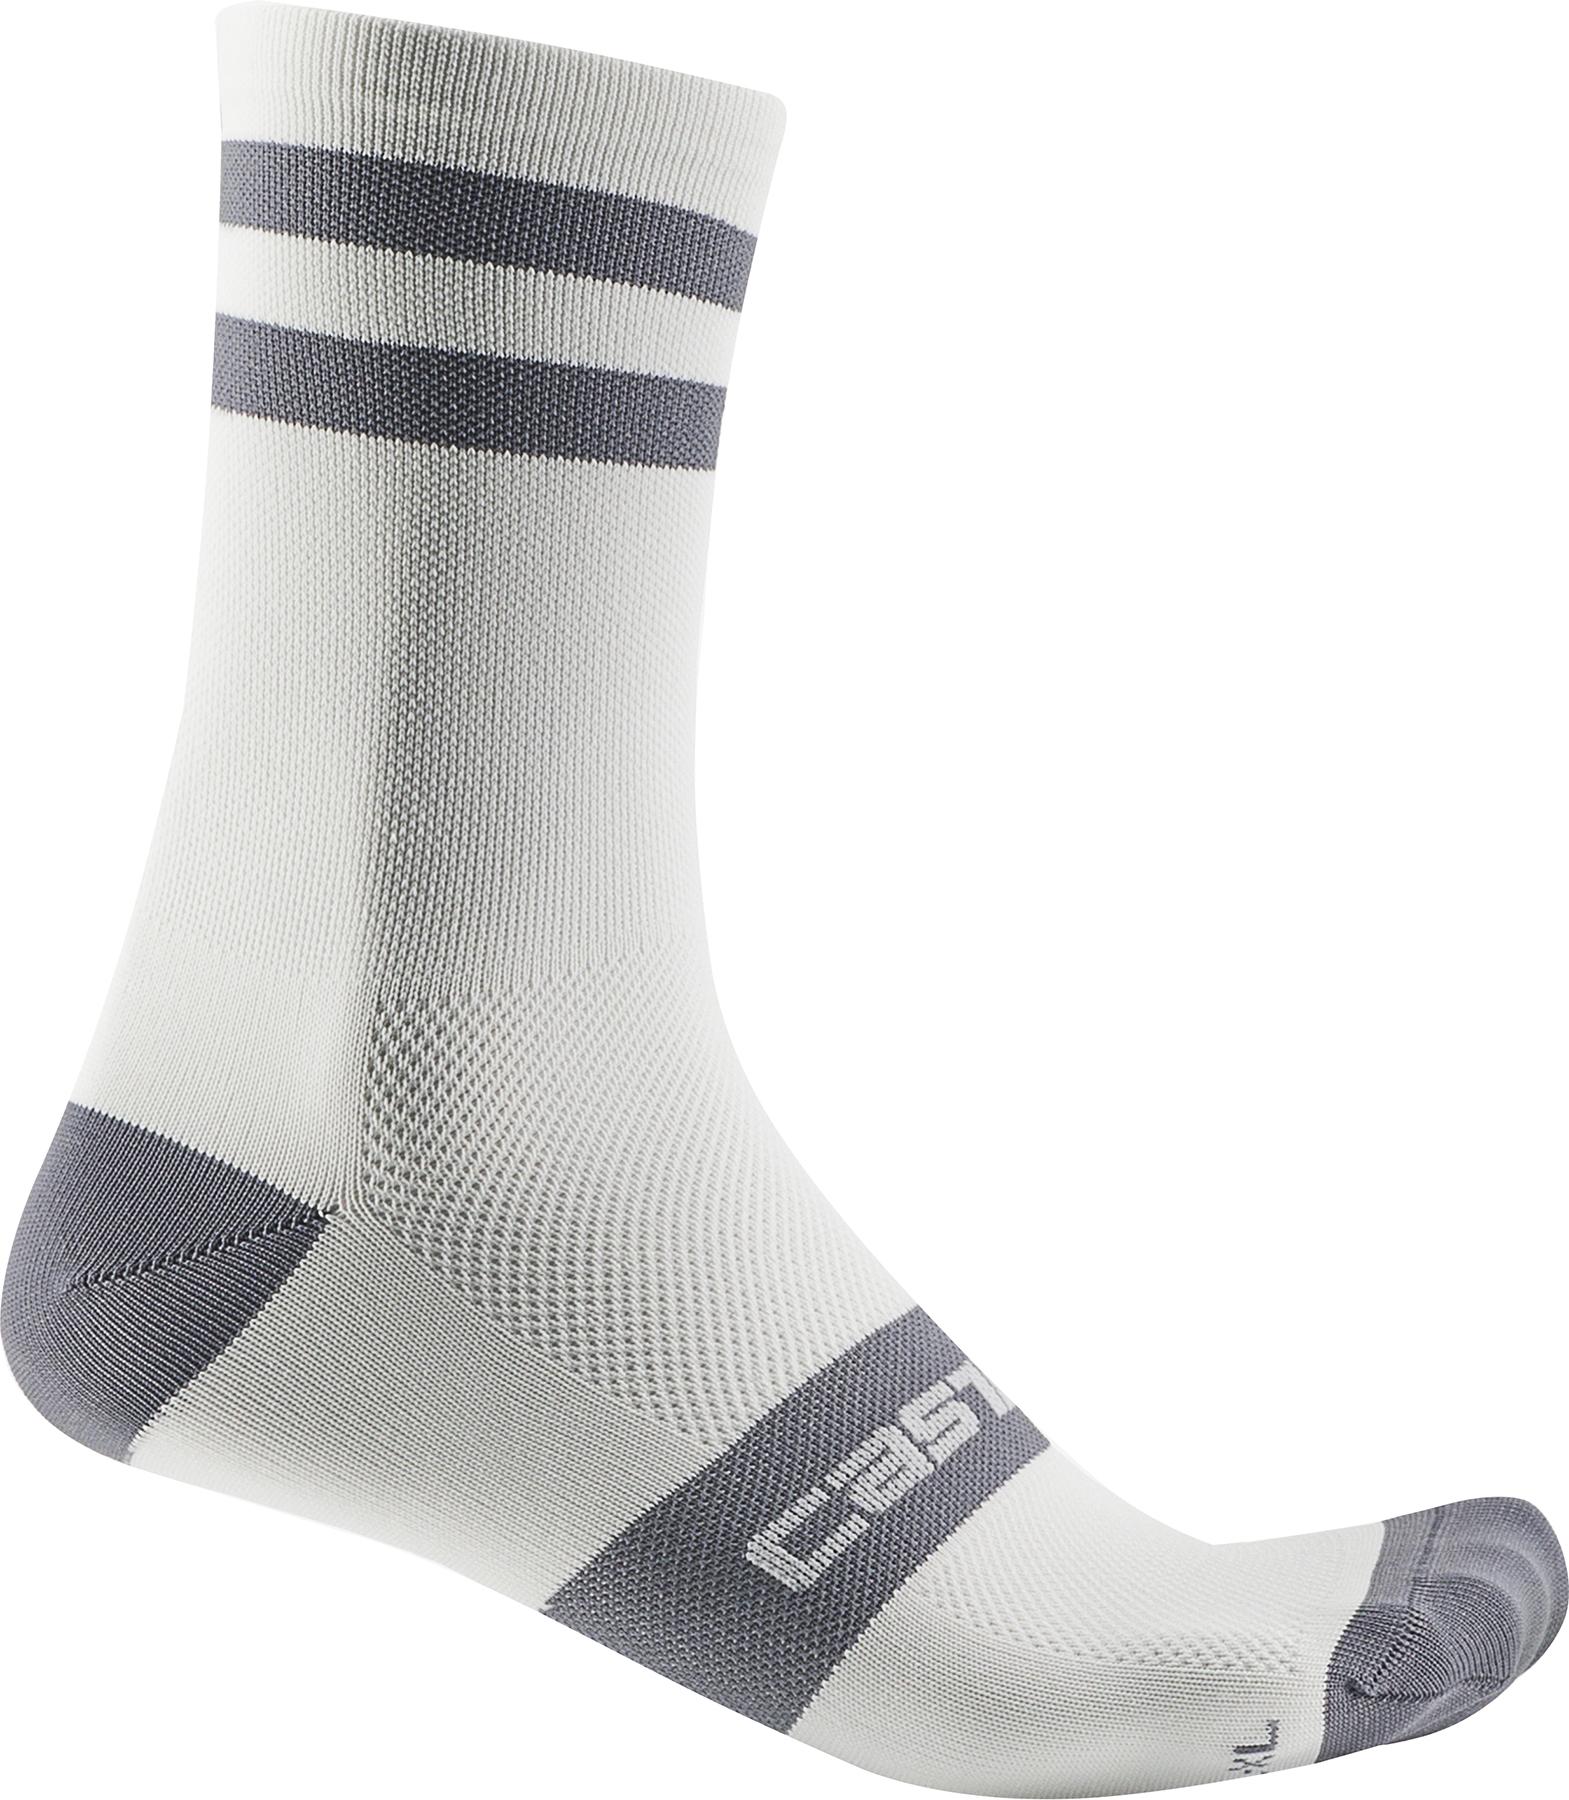 Castelli Velocissimo Kit Socks - White/grey